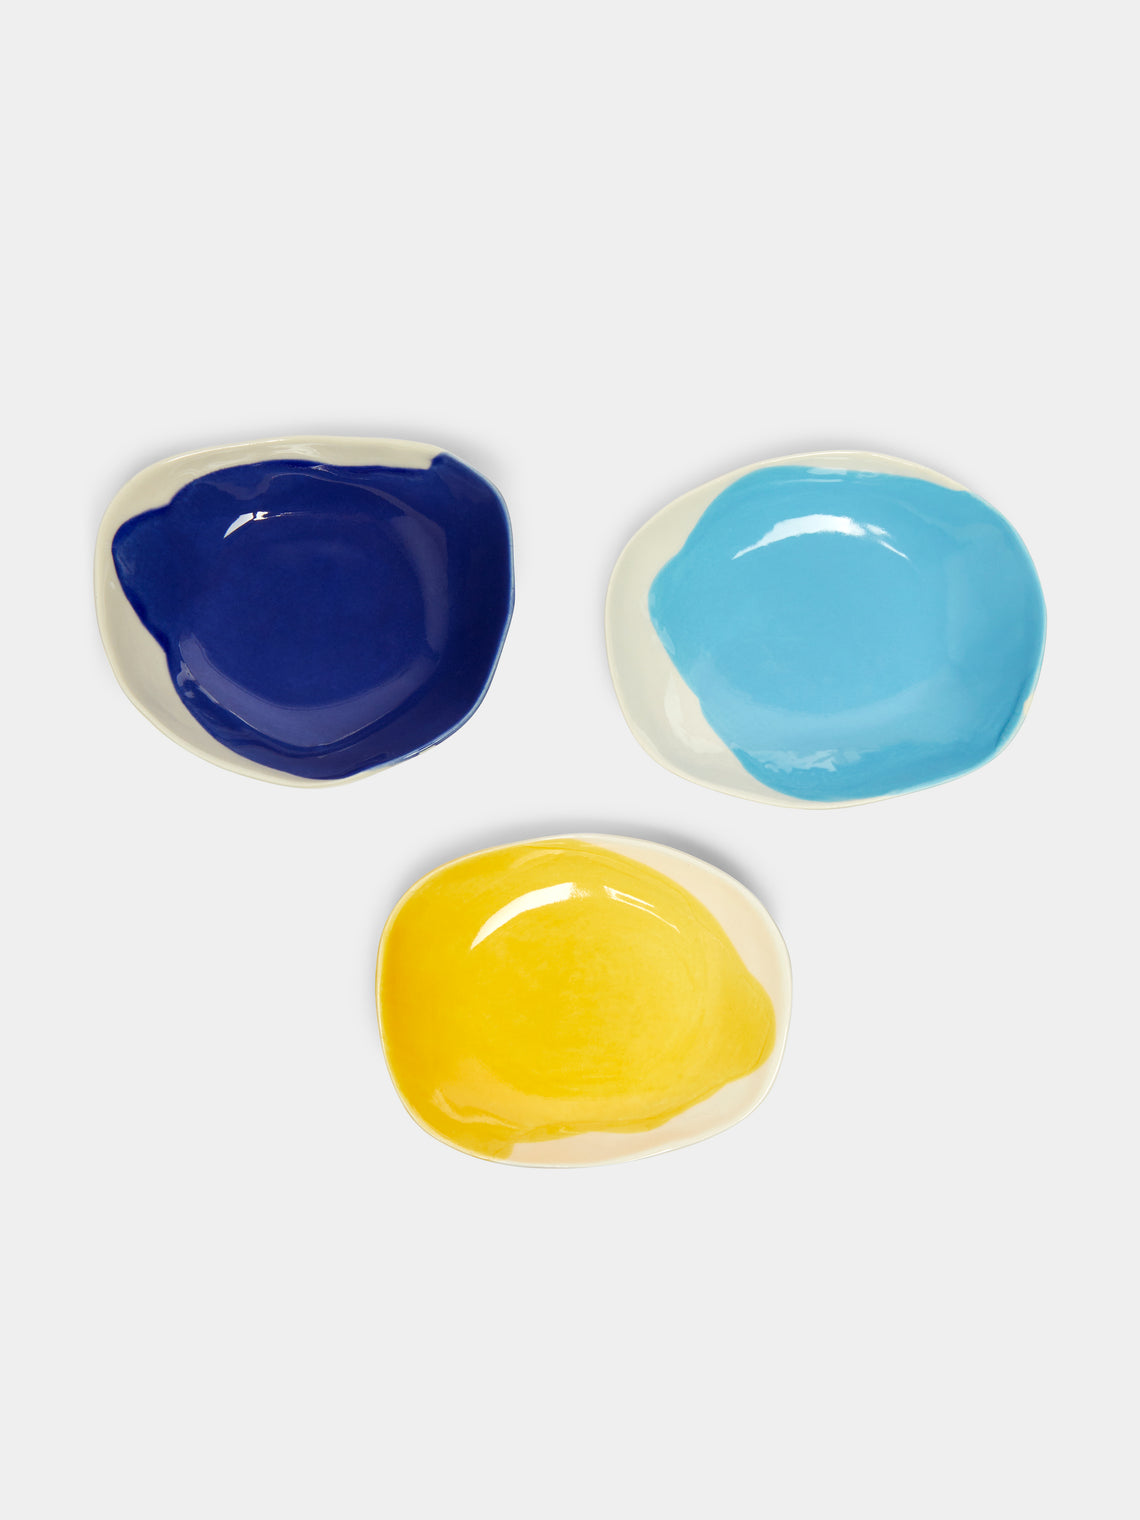 Pottery & Poetry - Hand-Glazed Porcelain Dipping Bowls (Set of 3) - Multiple - ABASK - 